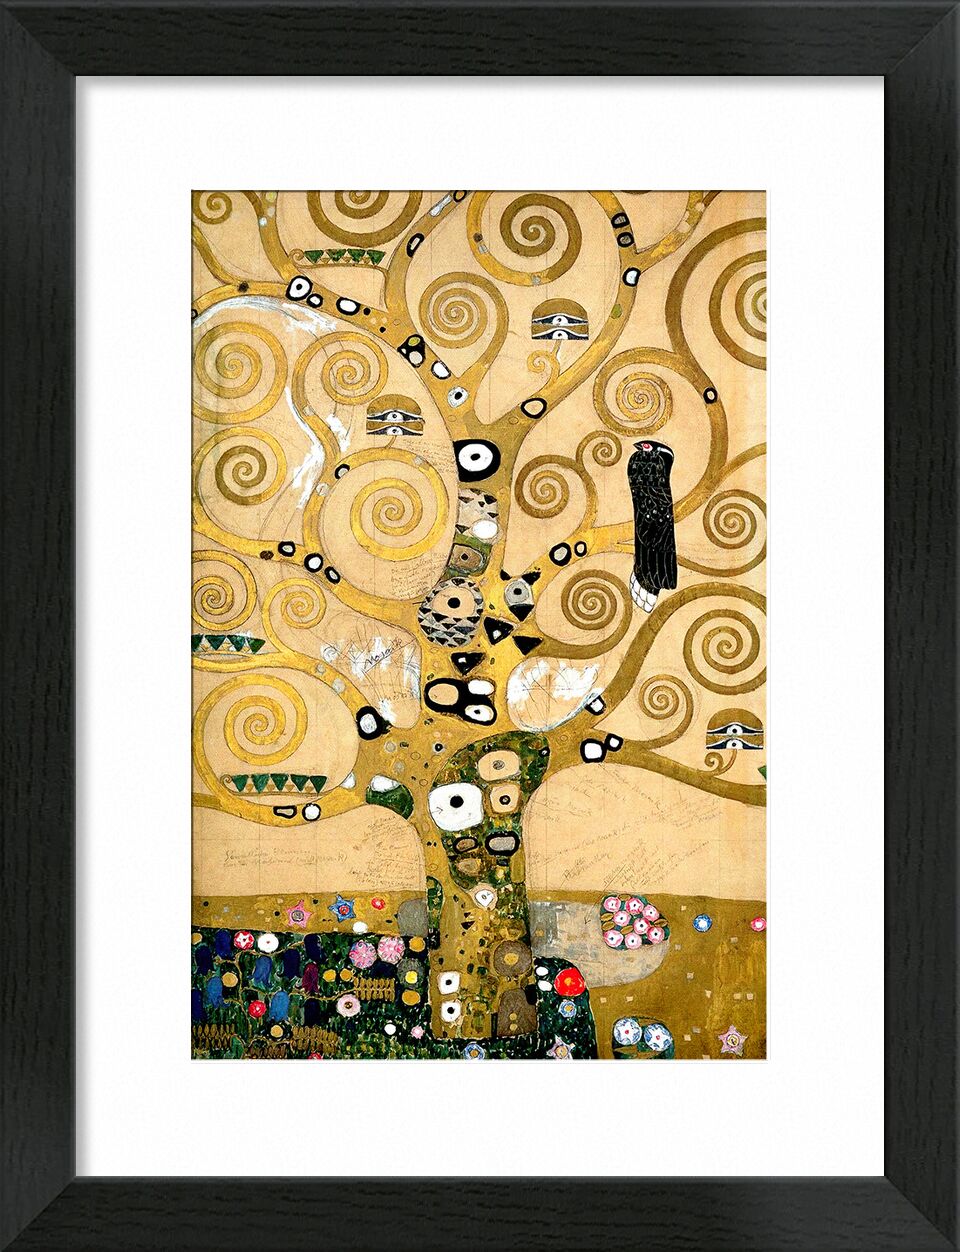 The tree of Life, The Arborvitae - Gustav Klimt von Bildende Kunst, Prodi Art, Baum des Lebens, Jugendstil, Malerei, Baum